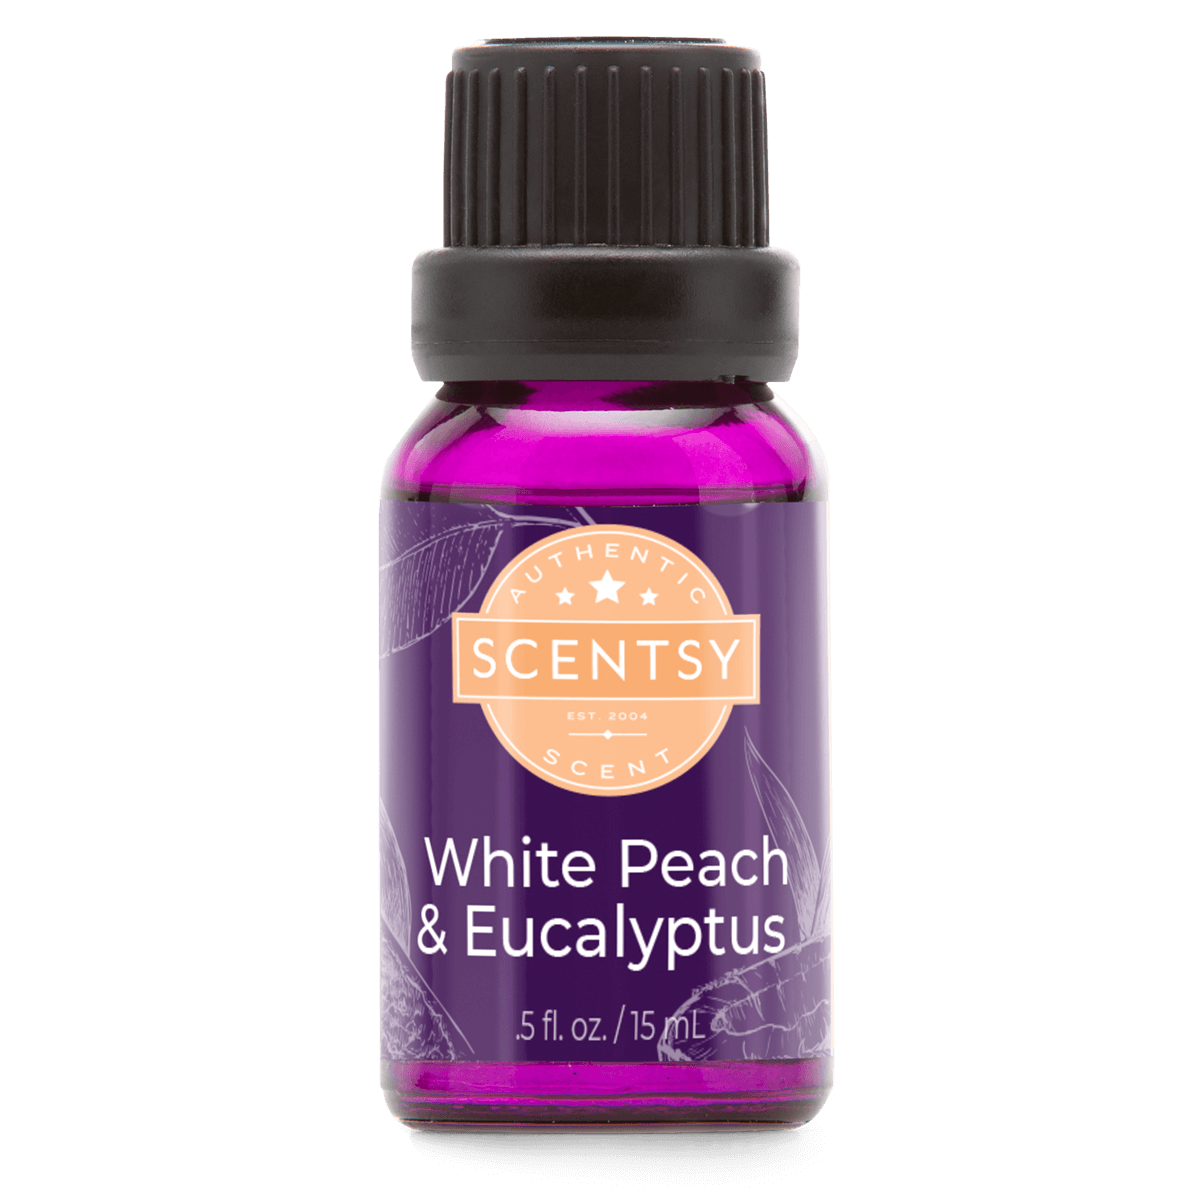 White Peach & Eucalyptus Natural Scentsy Oil